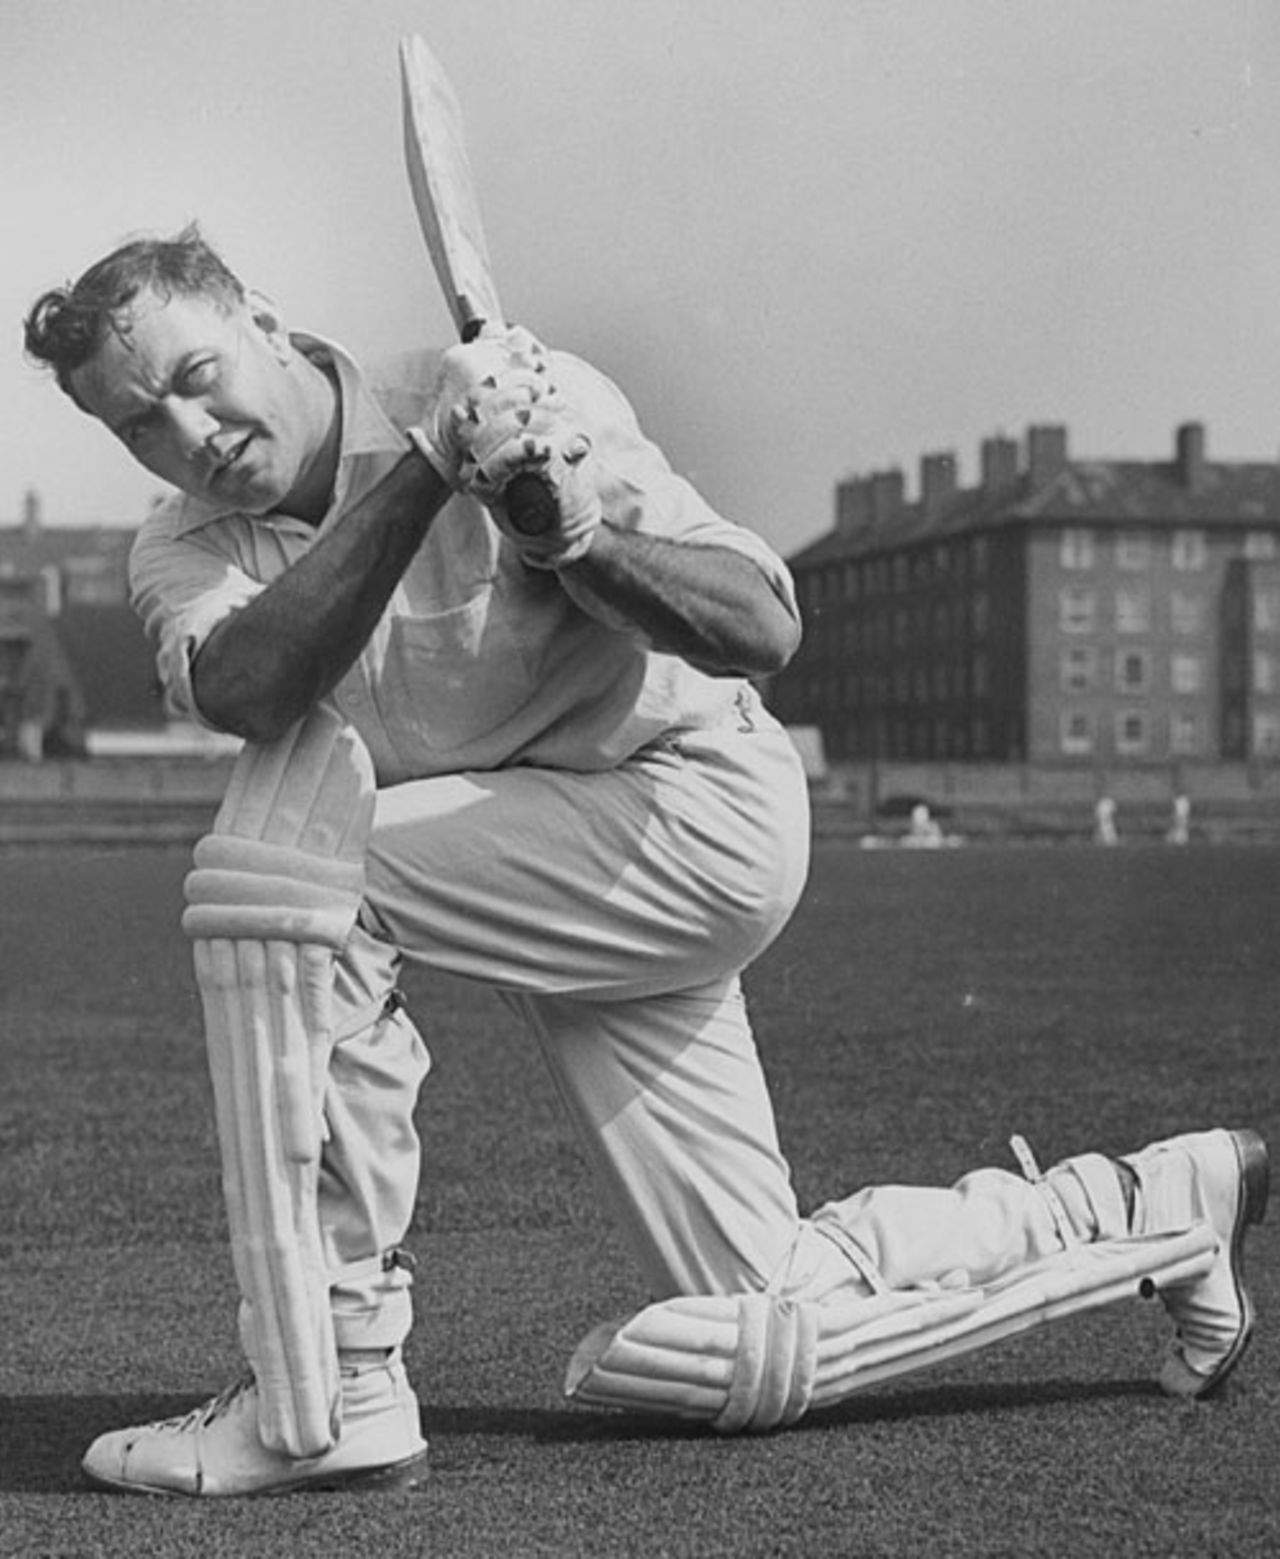 Eric Bedser poses  in a batting shot, April 22, 1952